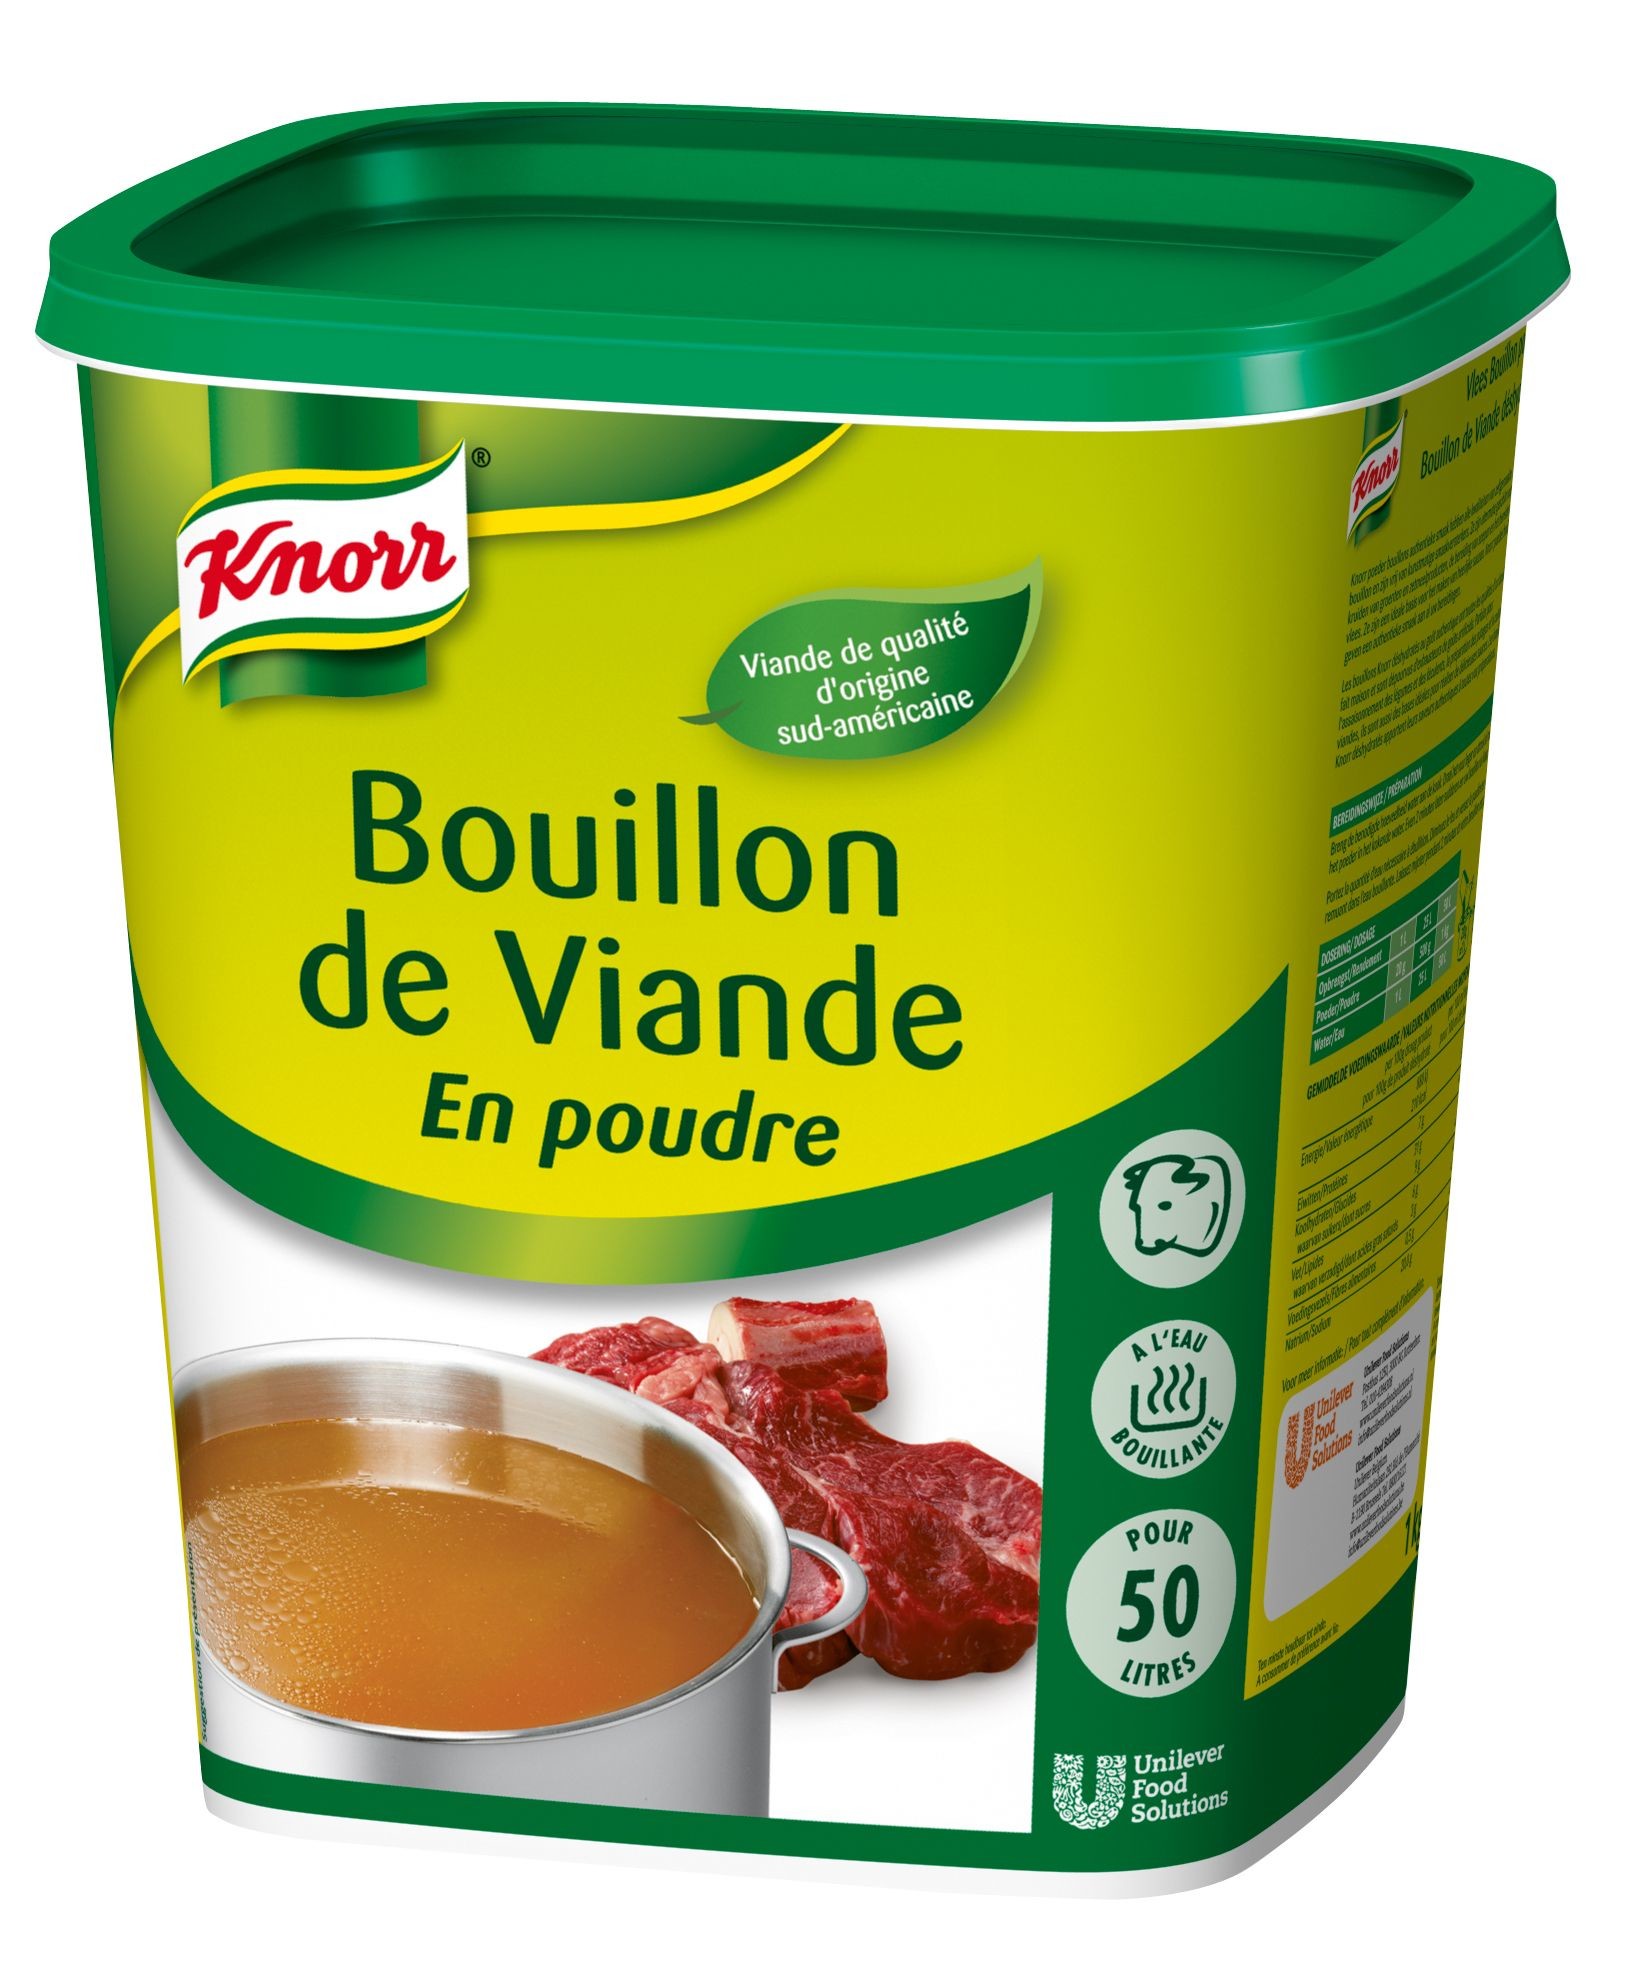 Knorr Gastronom bouillon viande poudre 1kg - Nevejan